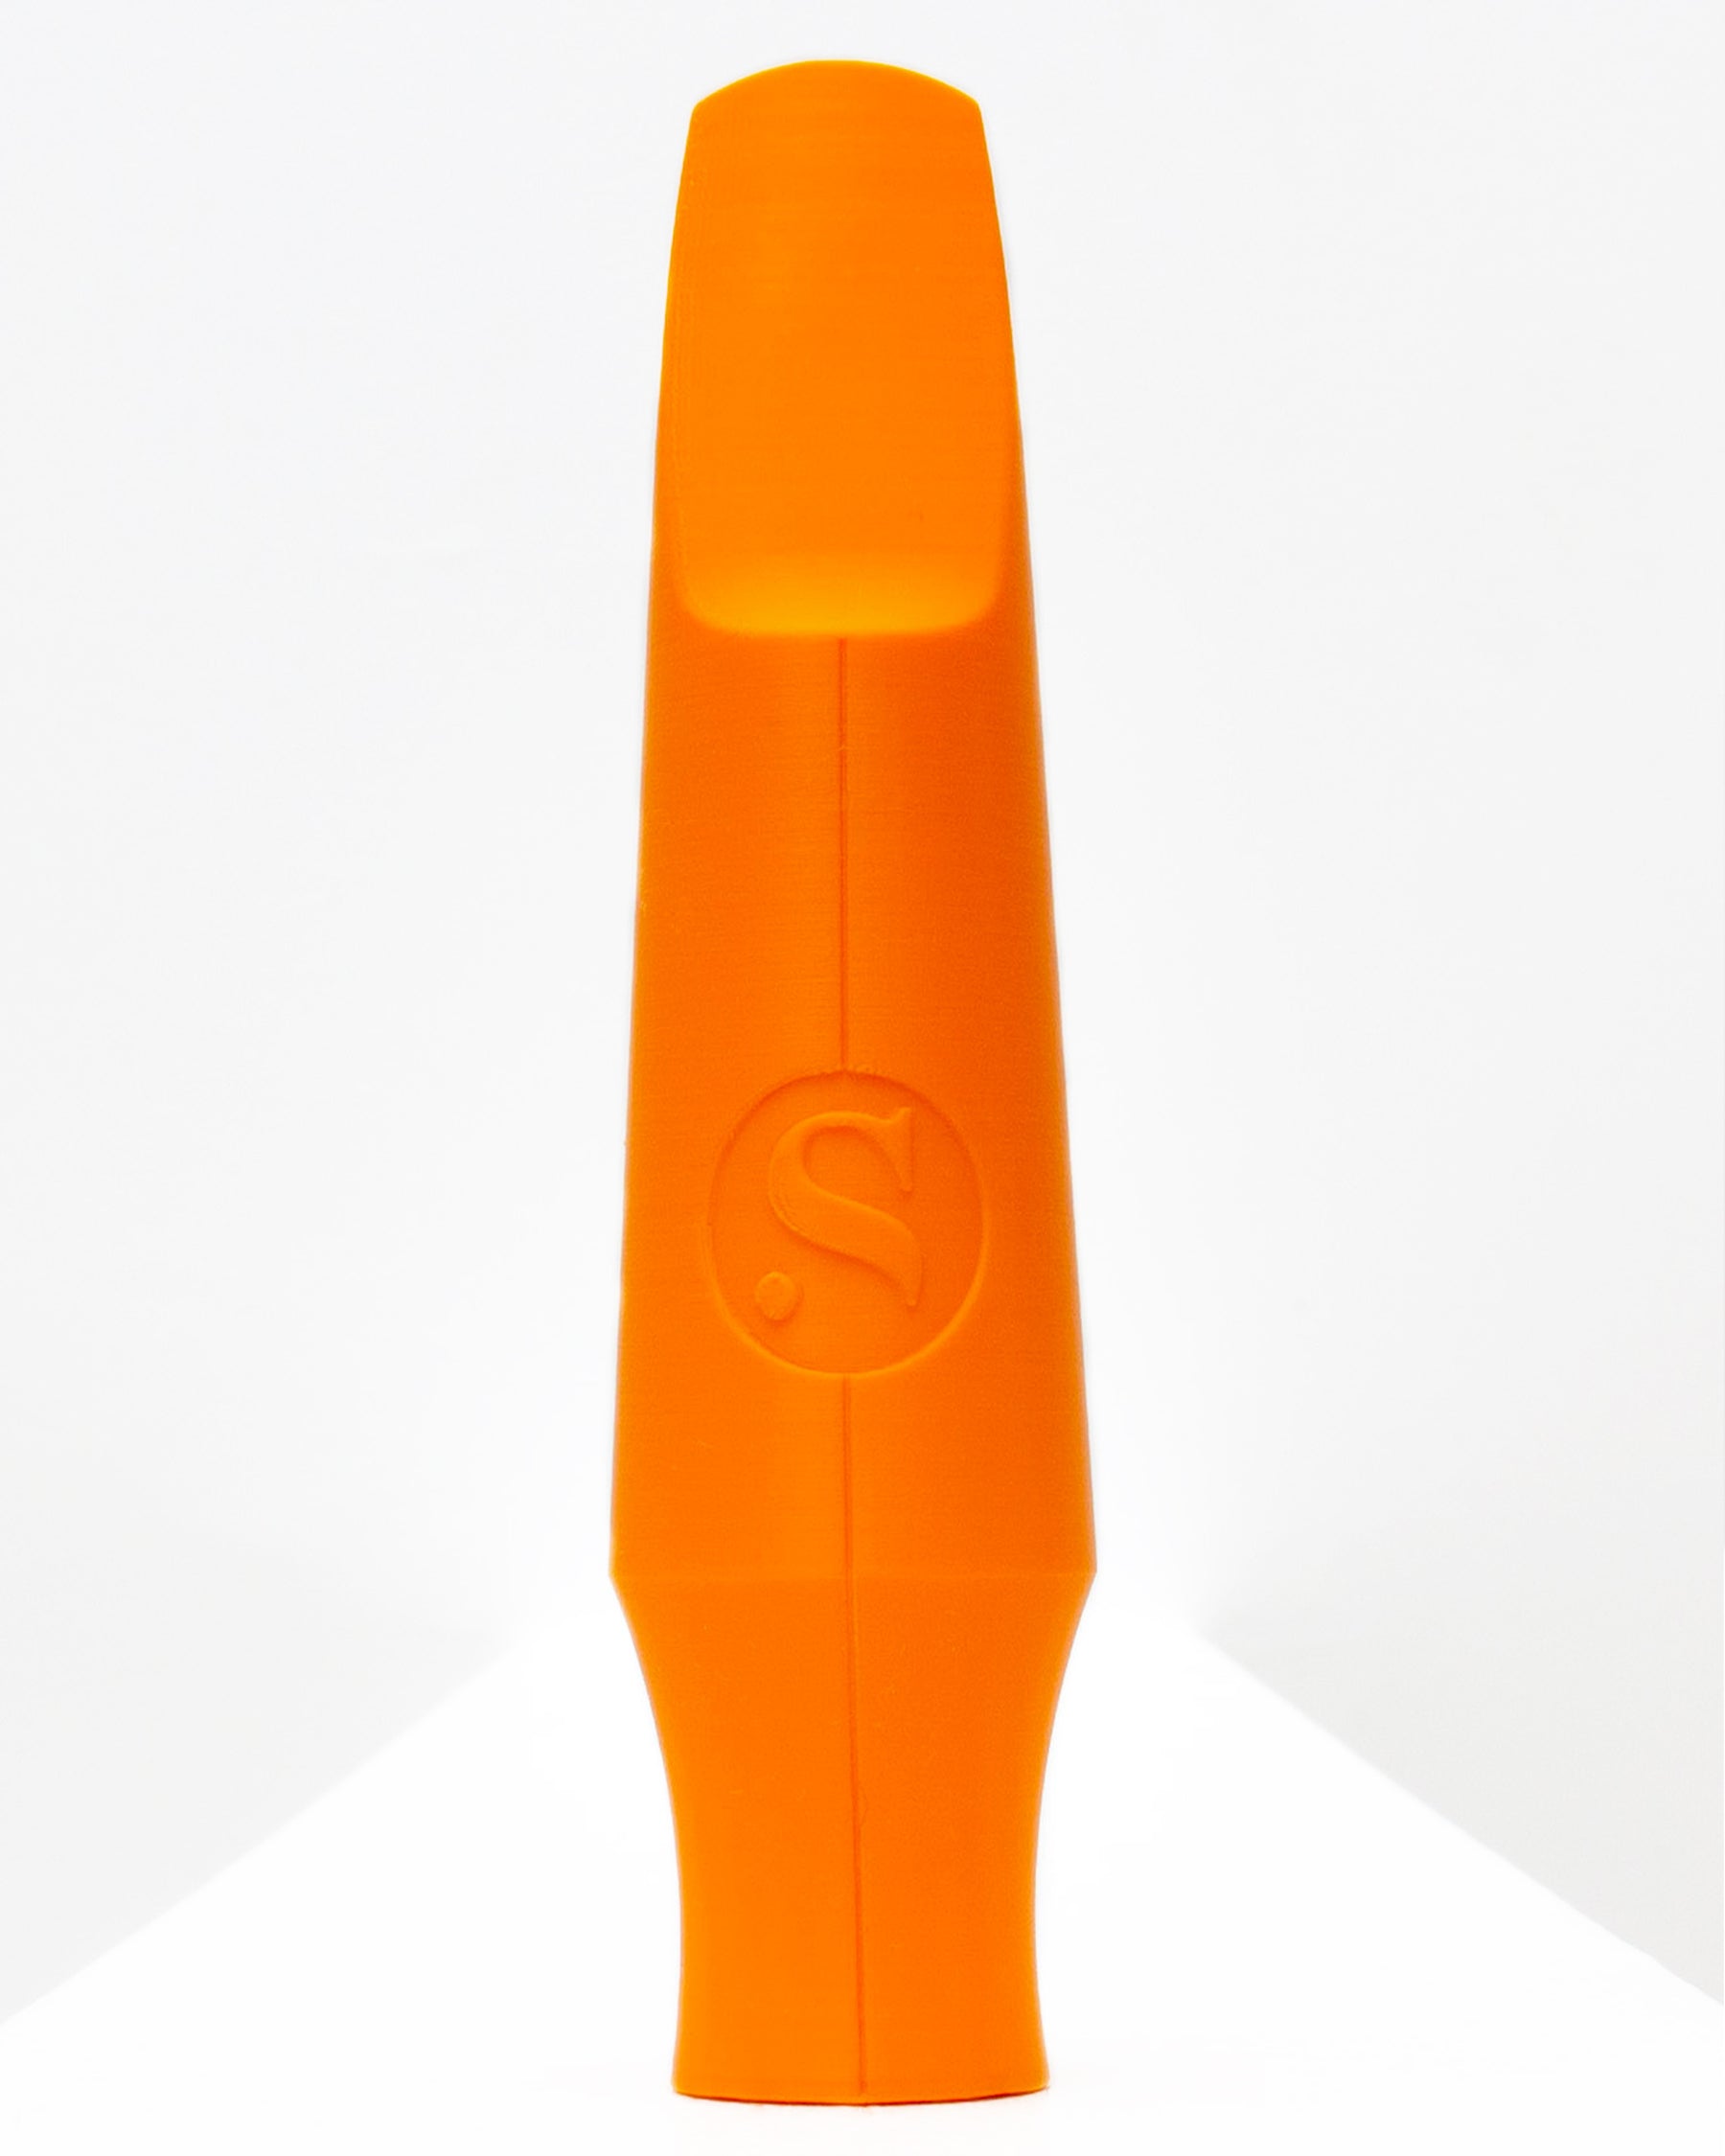 Baritone Signature Saxophone mouthpiece - Michael Wilbur by Syos - 9 / Lava Orange